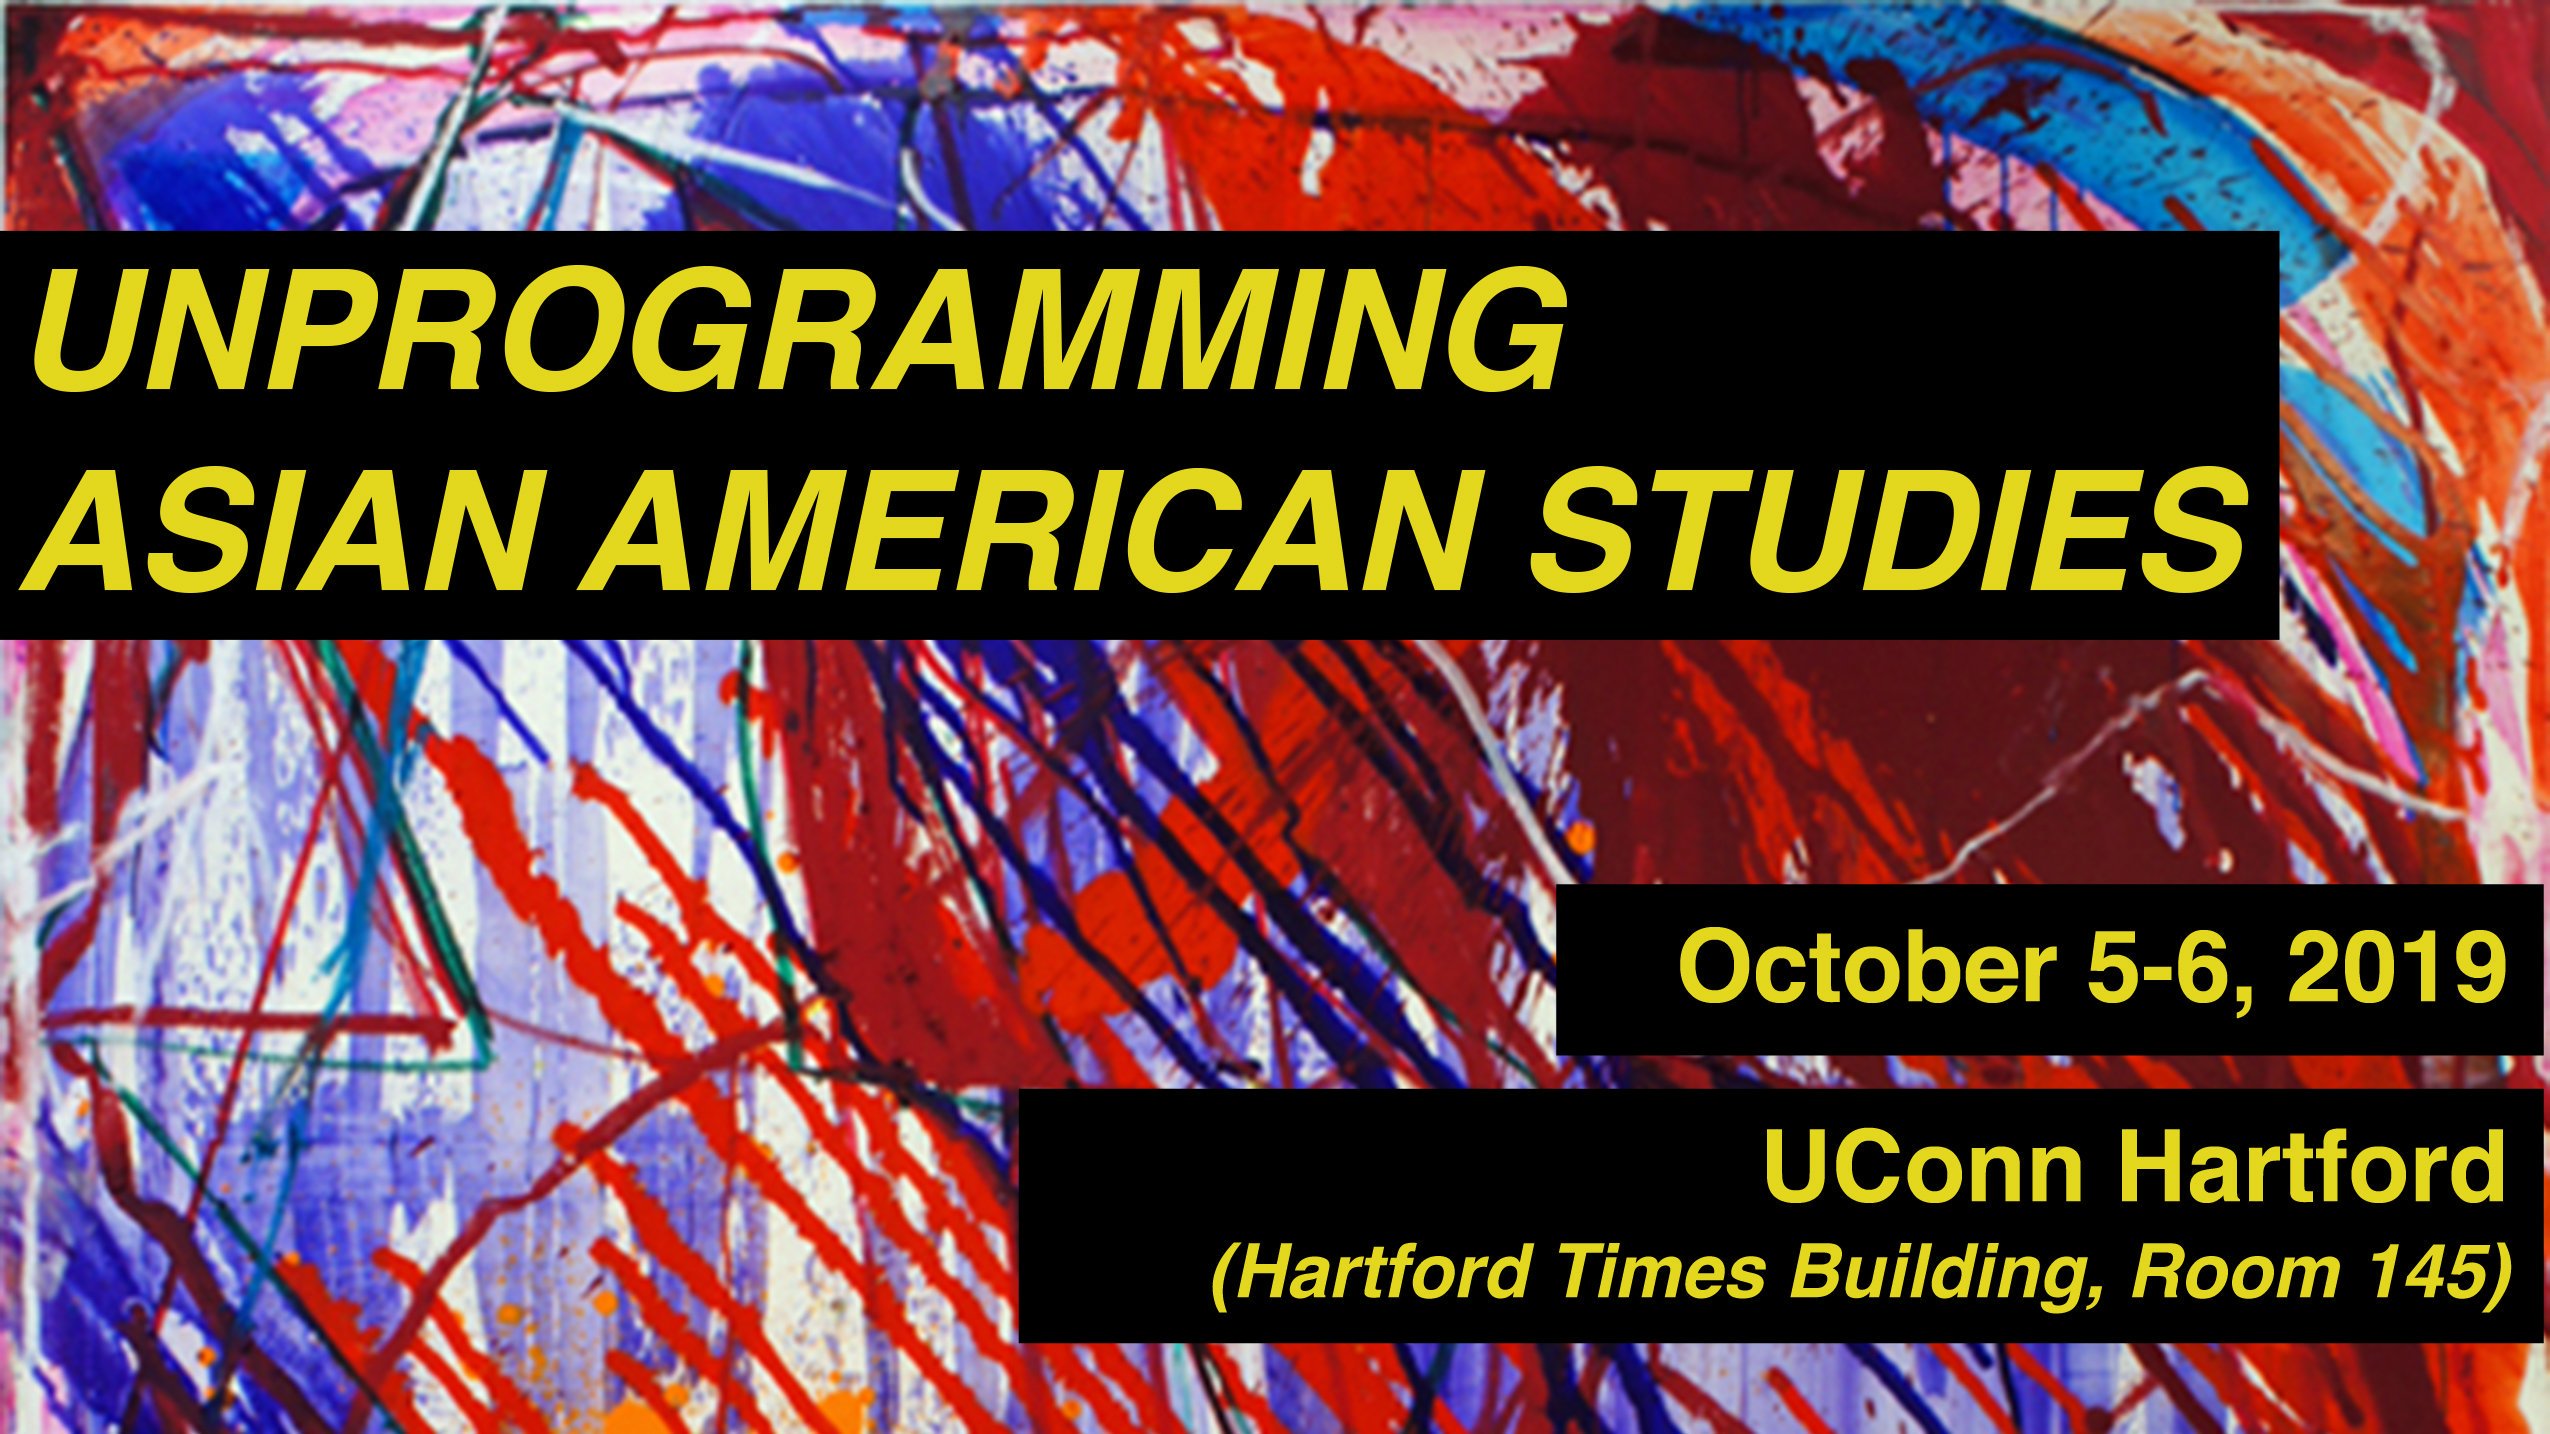 Unprogramming Asian American Studies Conference